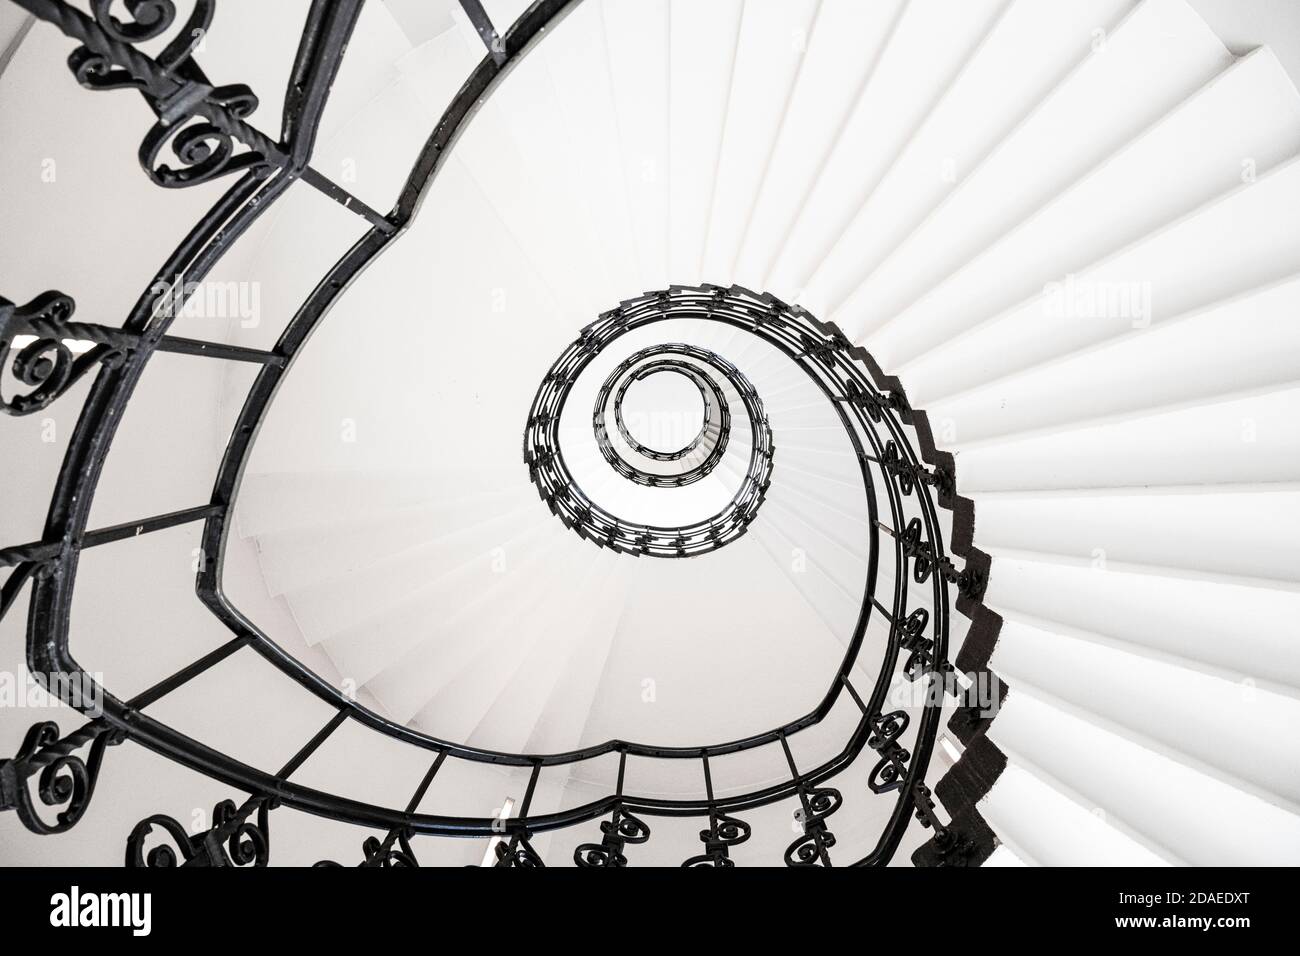 Europe, Germany, Hanseatic City of Hamburg, staircase architecture Stock Photo